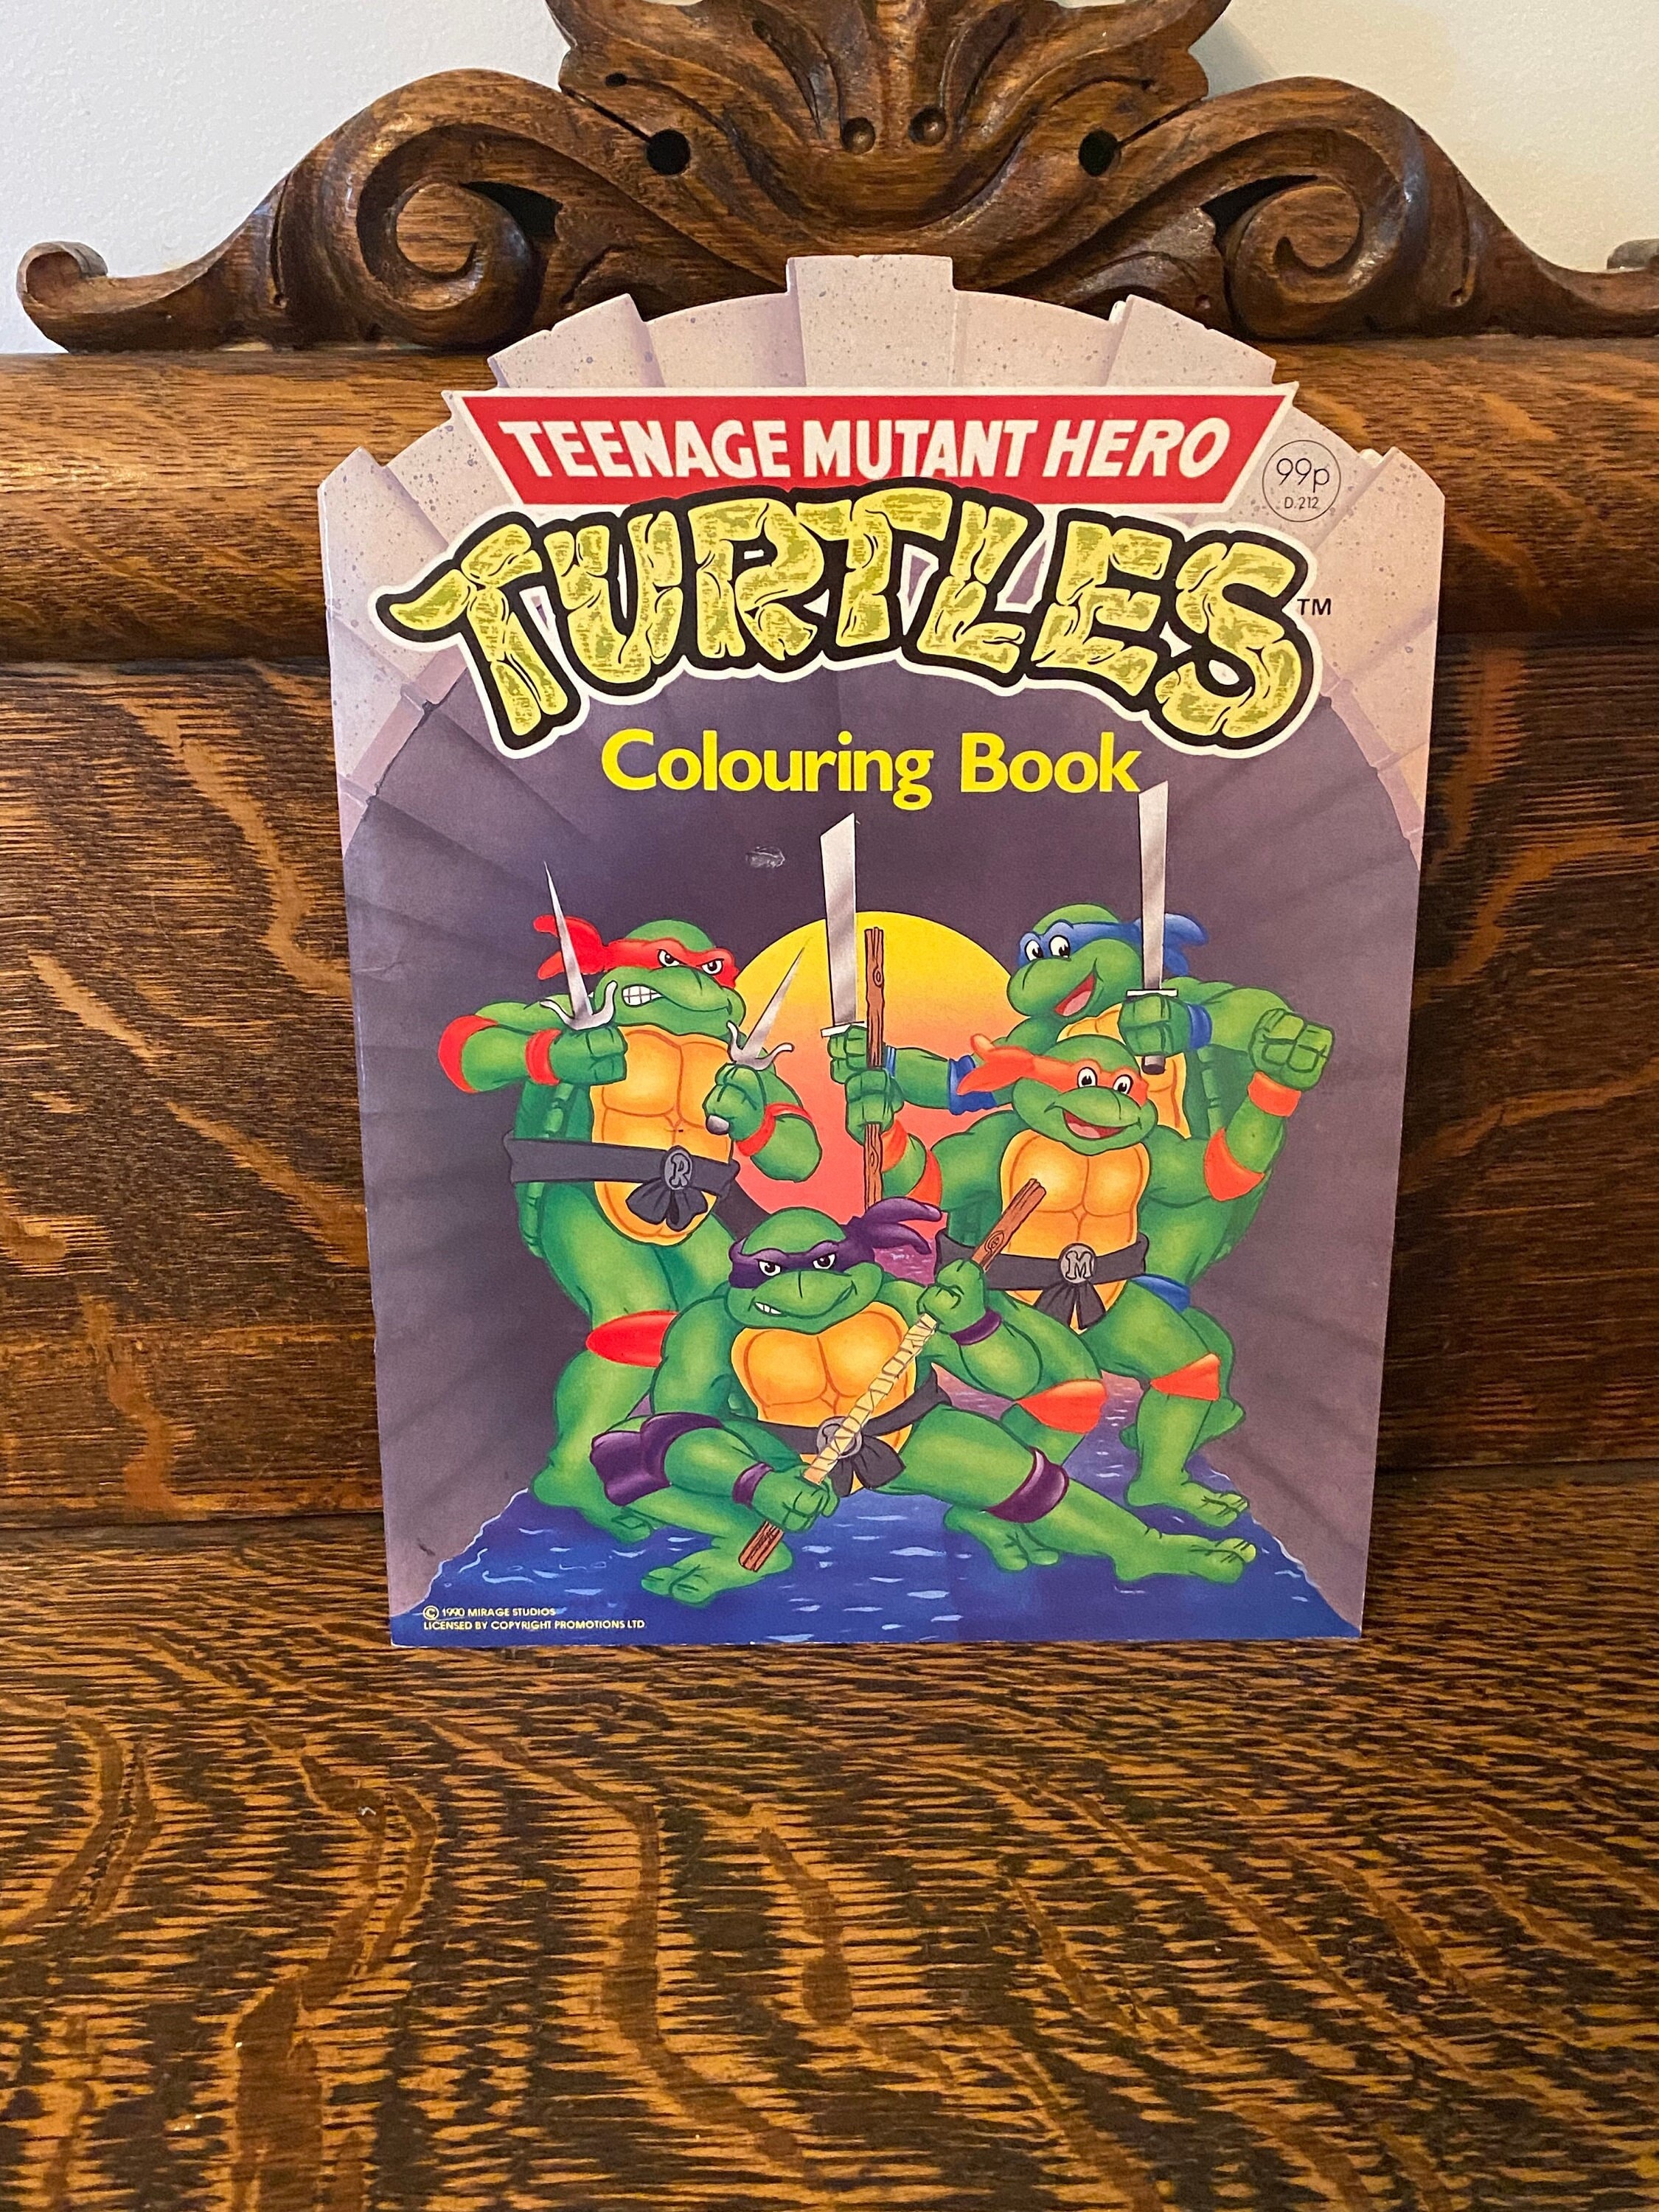 Tmnt colouring book teenage mutant ninja turtles coloring book mirage studios s collectible tmht england edition